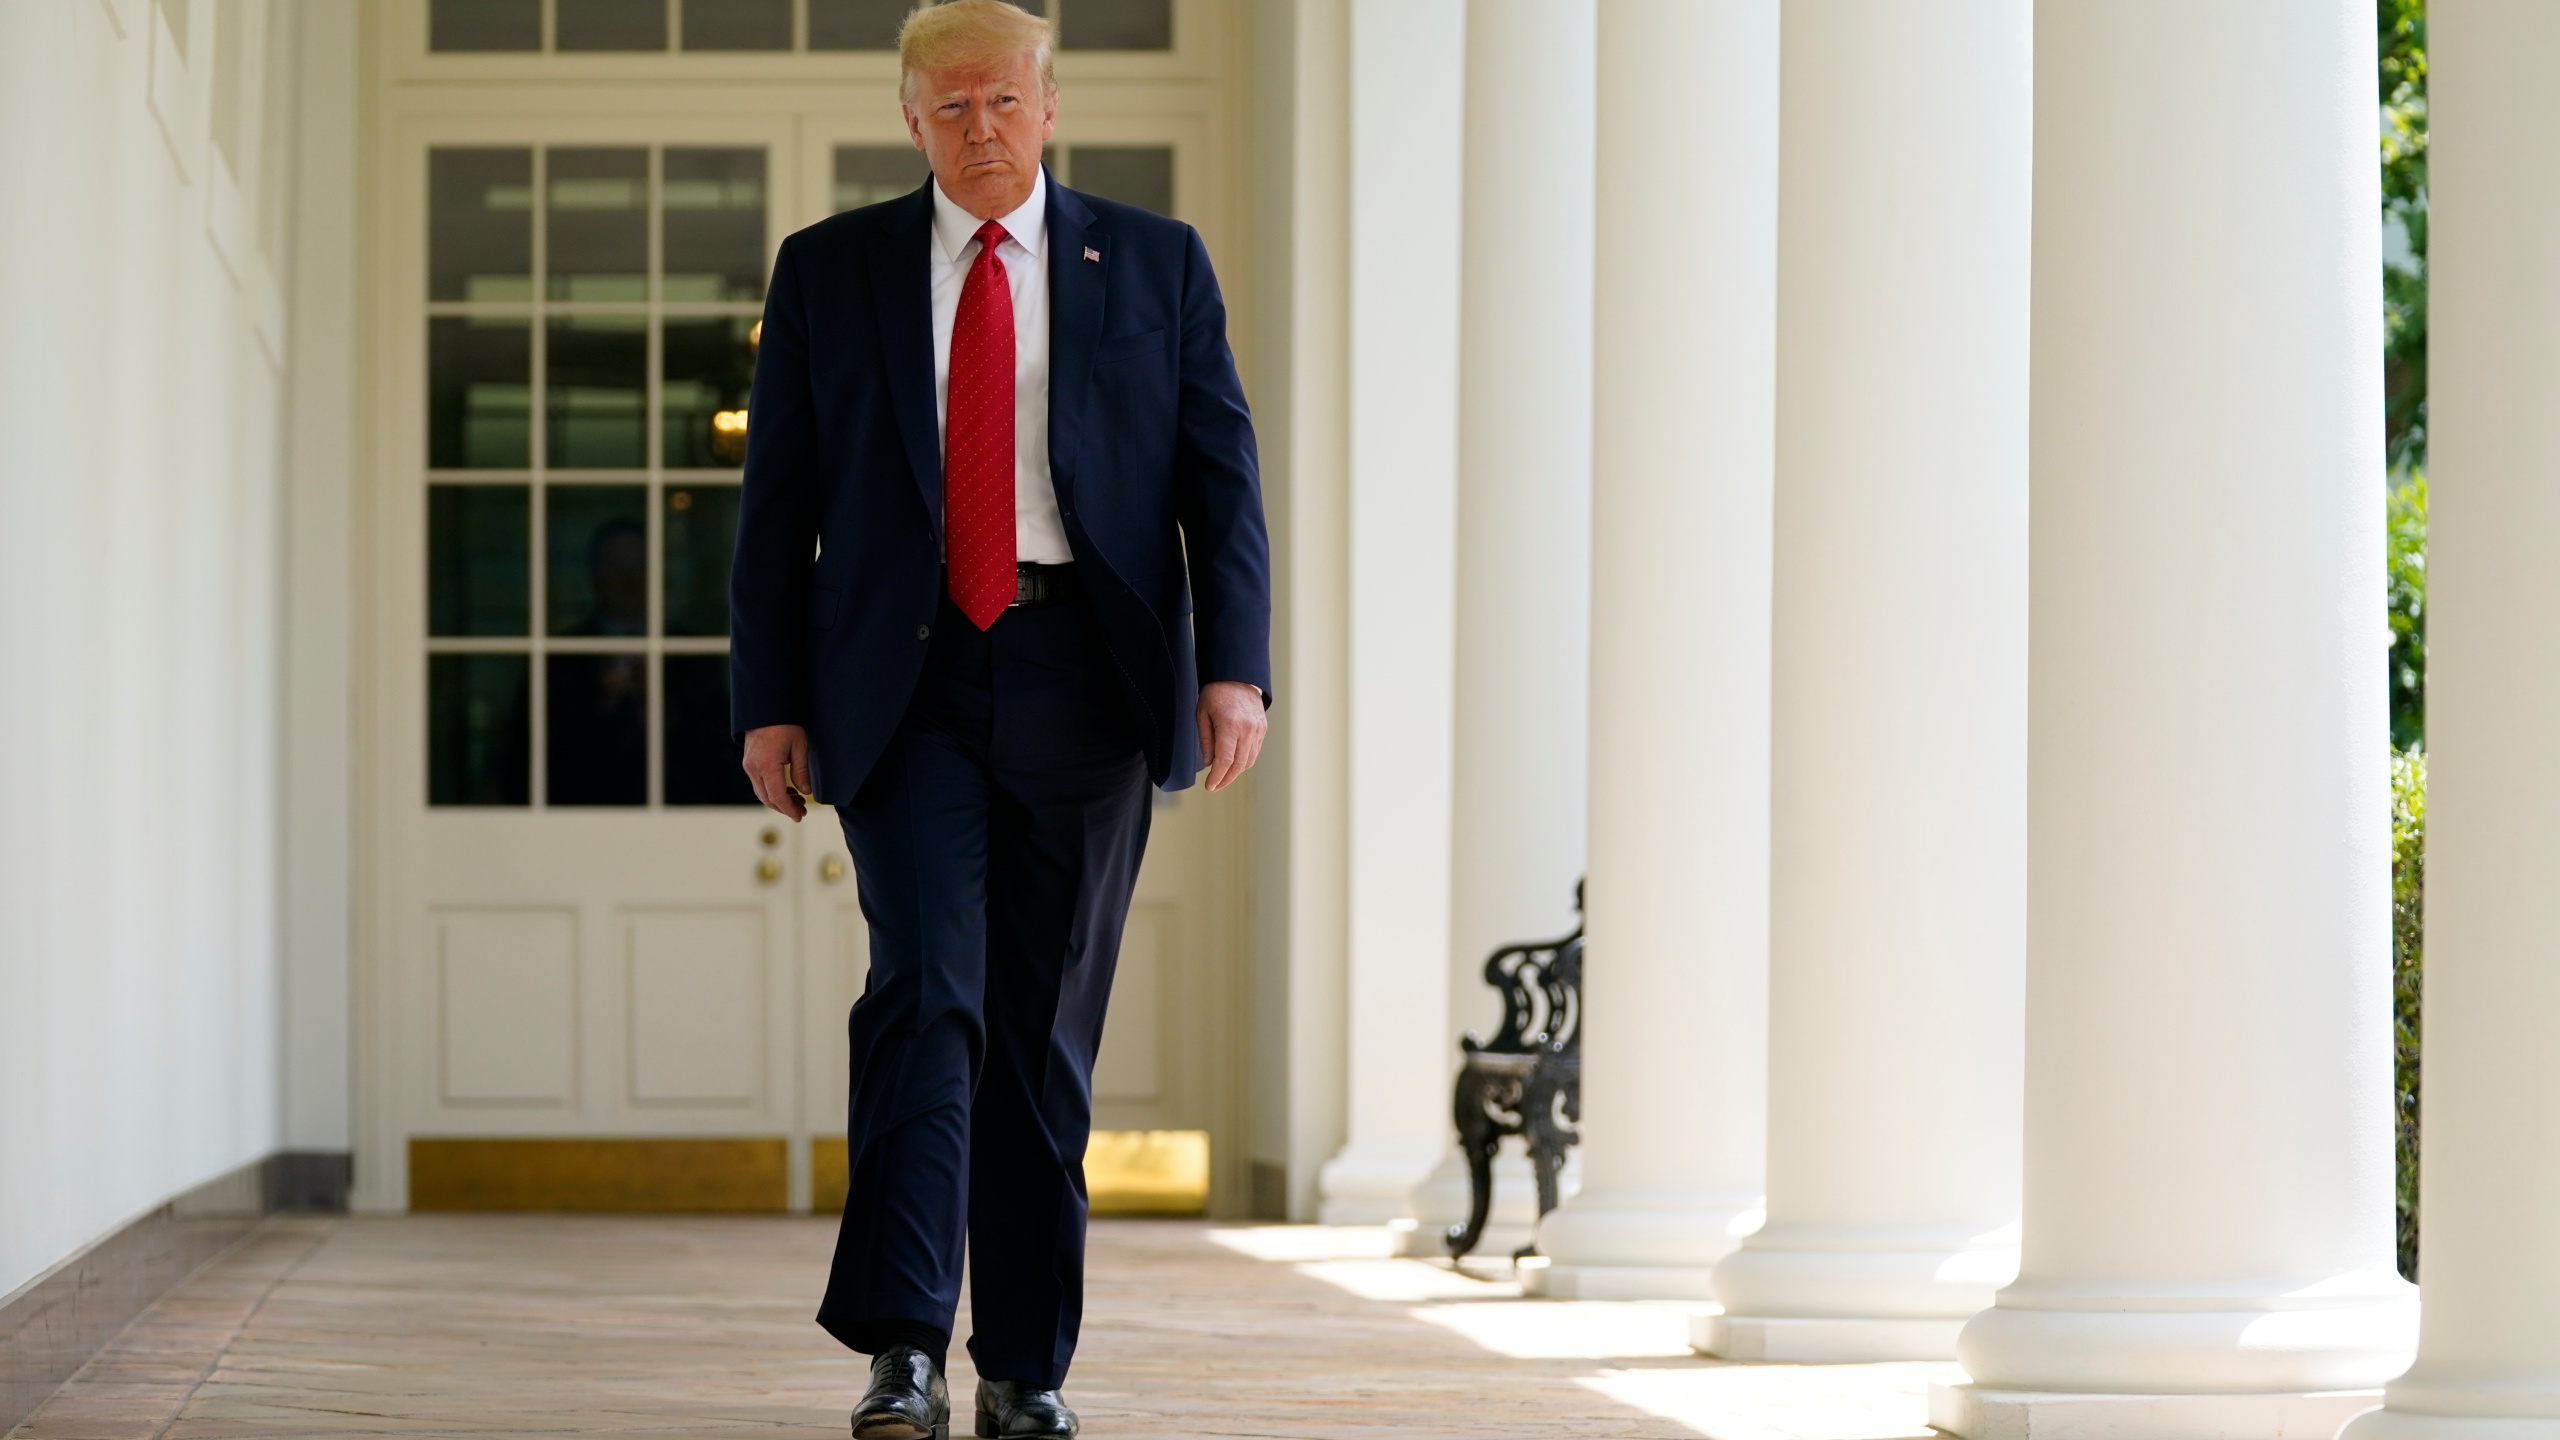 Trump leaves Washington in limbo